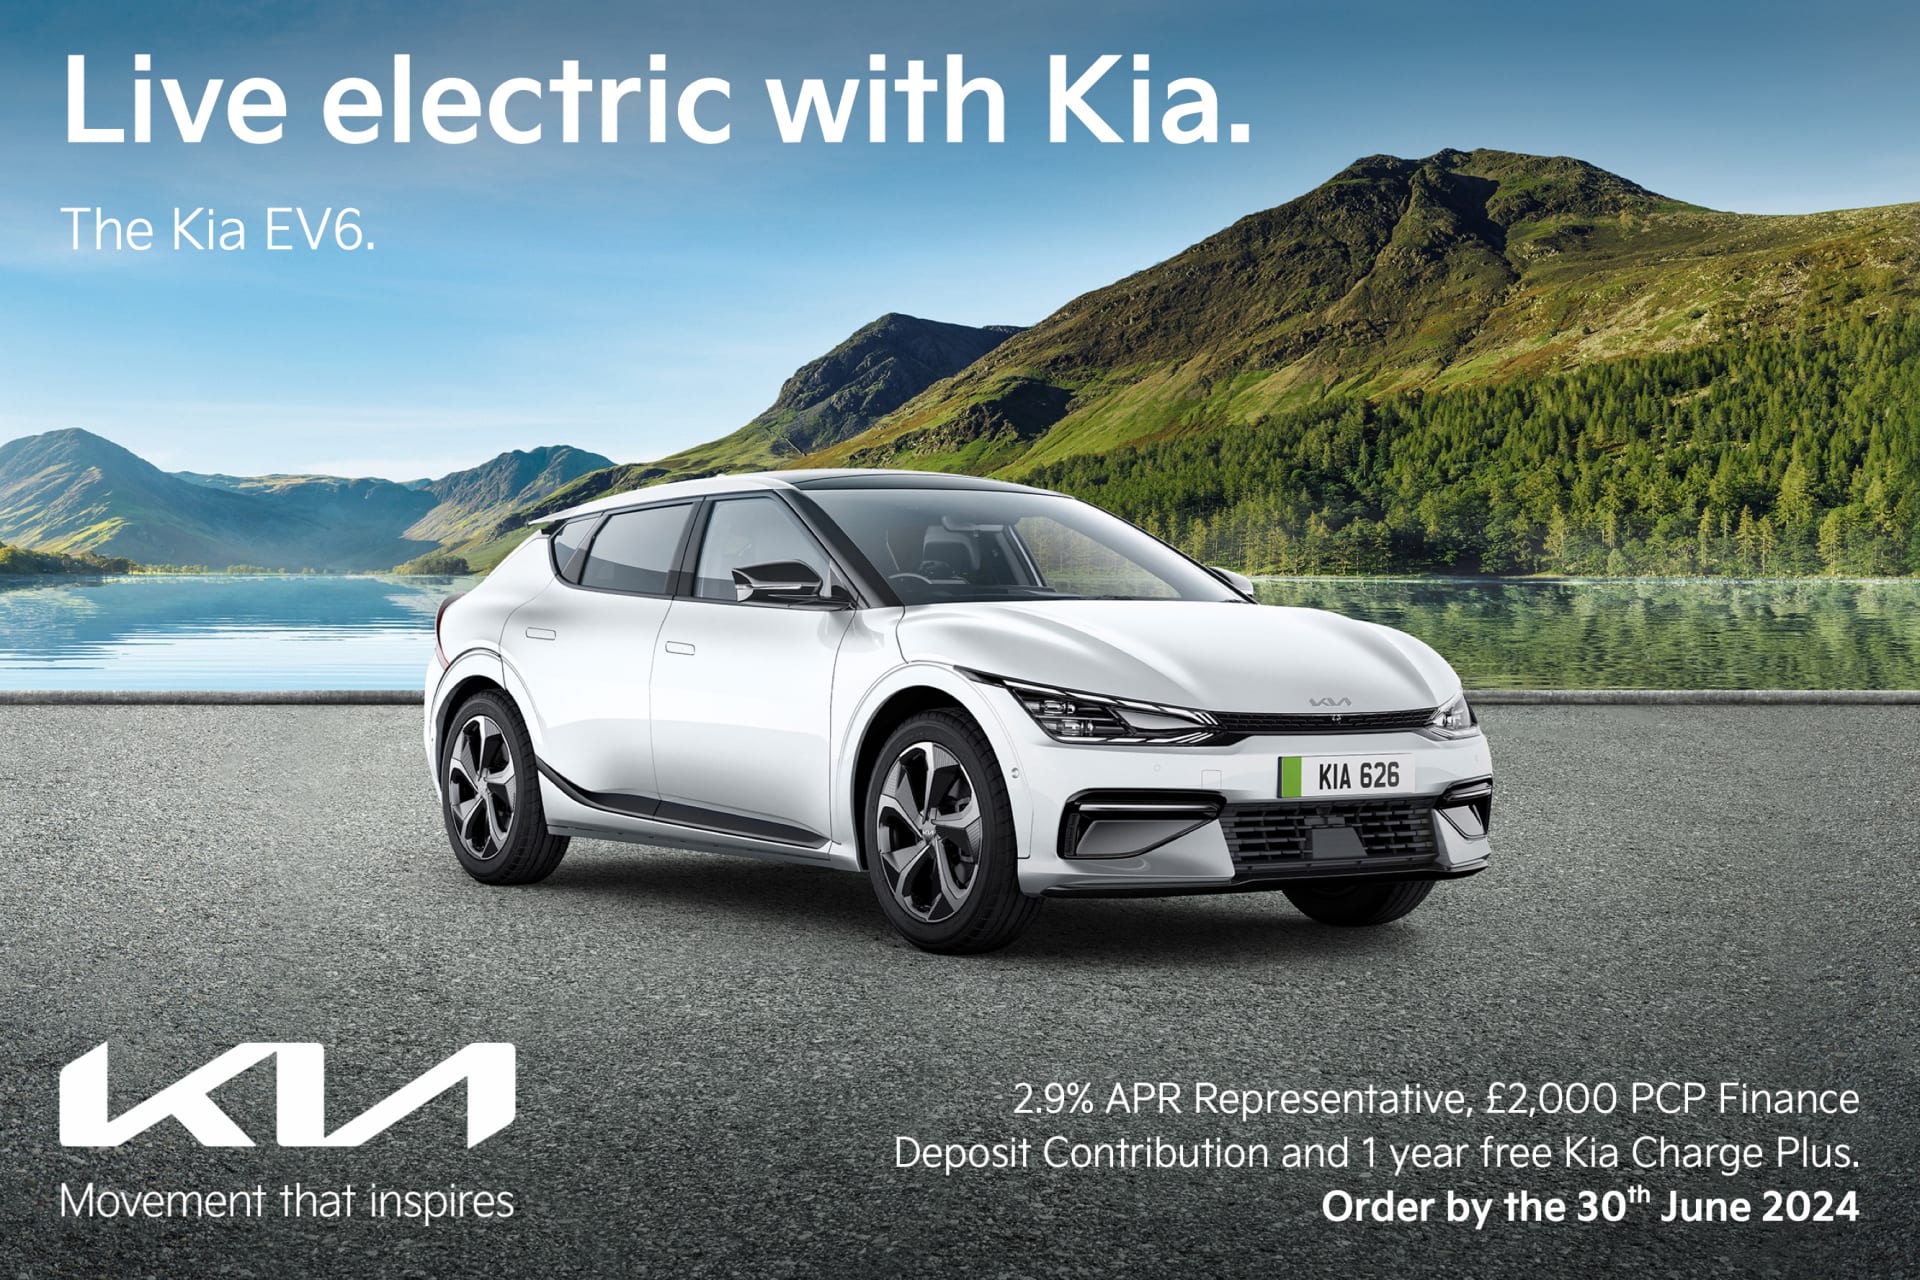 Live Electric with Kia (EV6)